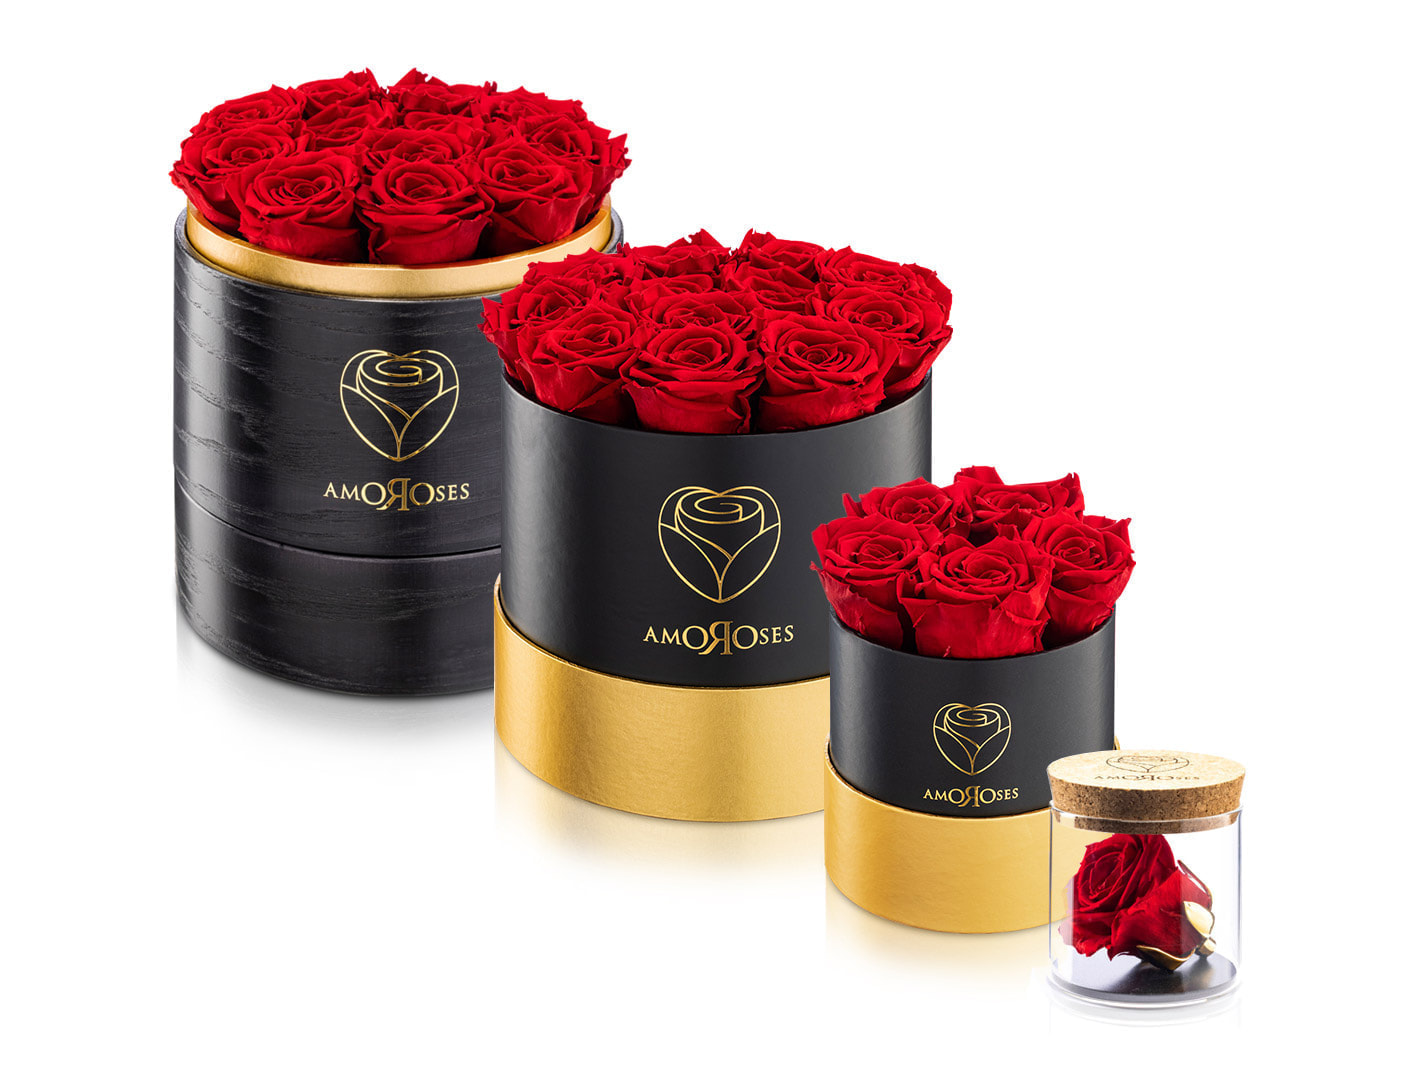 Amoroses rose stabilizzate per regalo speciale